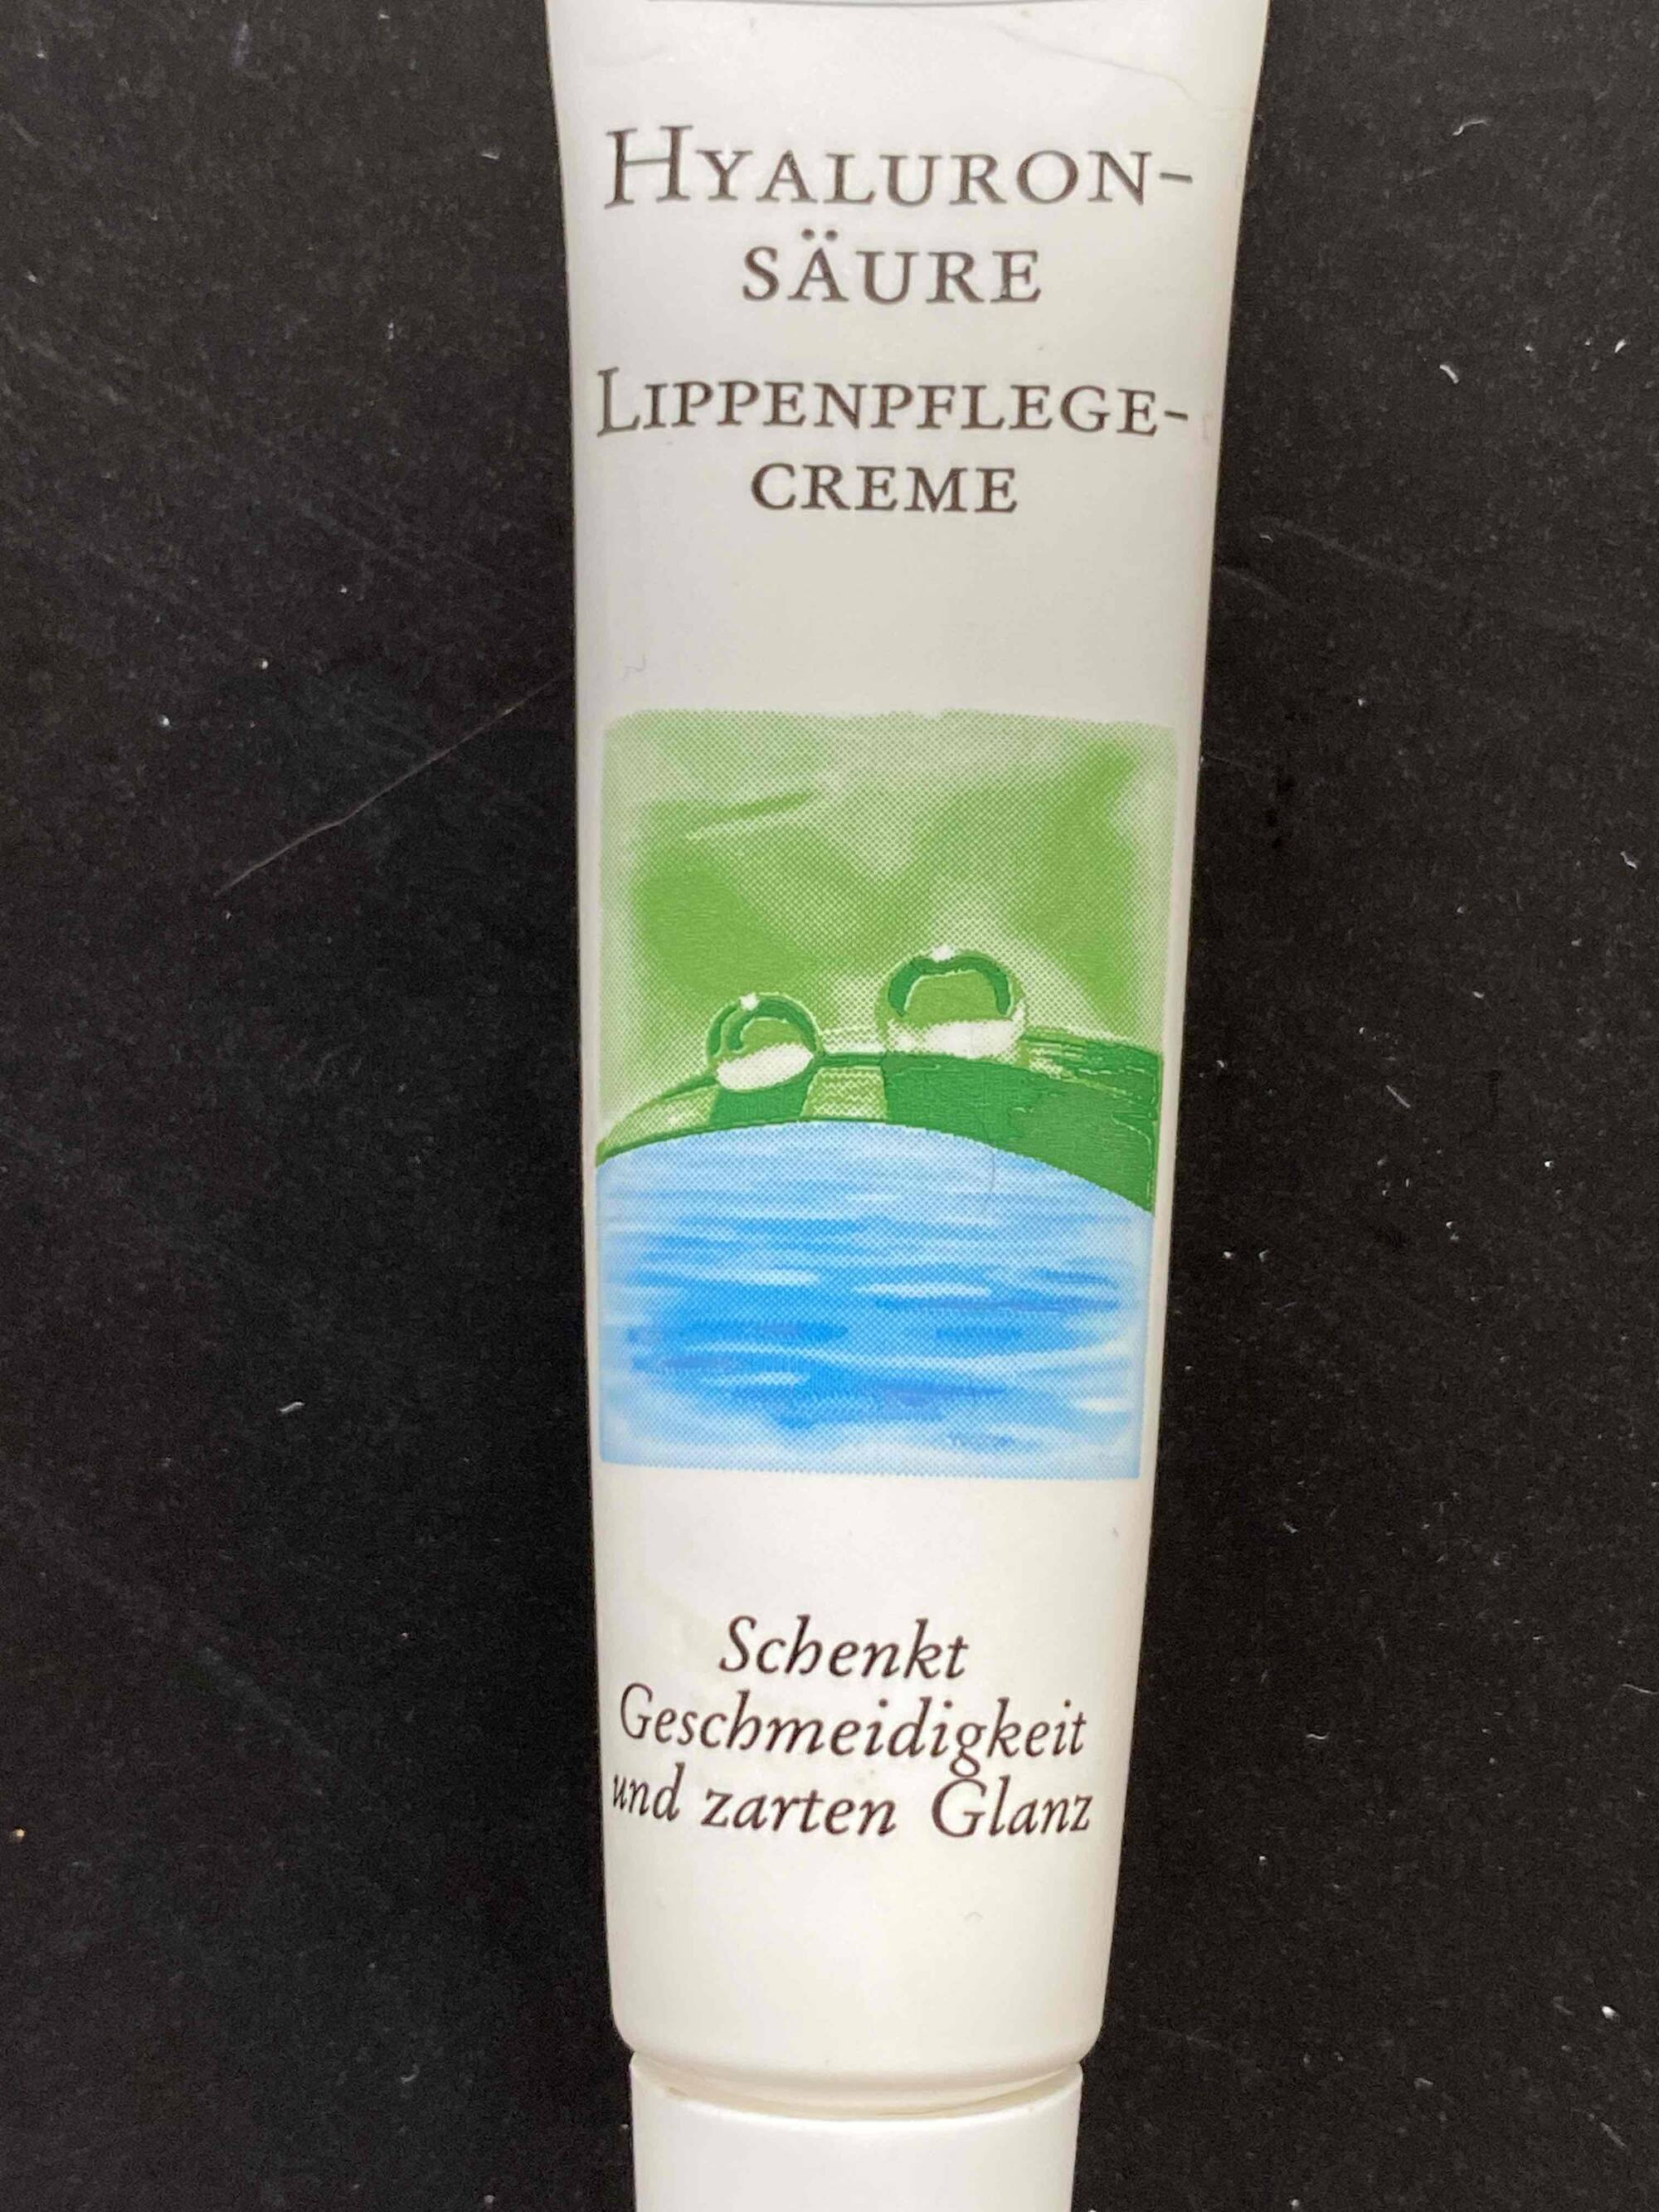 SANCT BERNHARD - Hyaluronsäure lippenpflege-creme